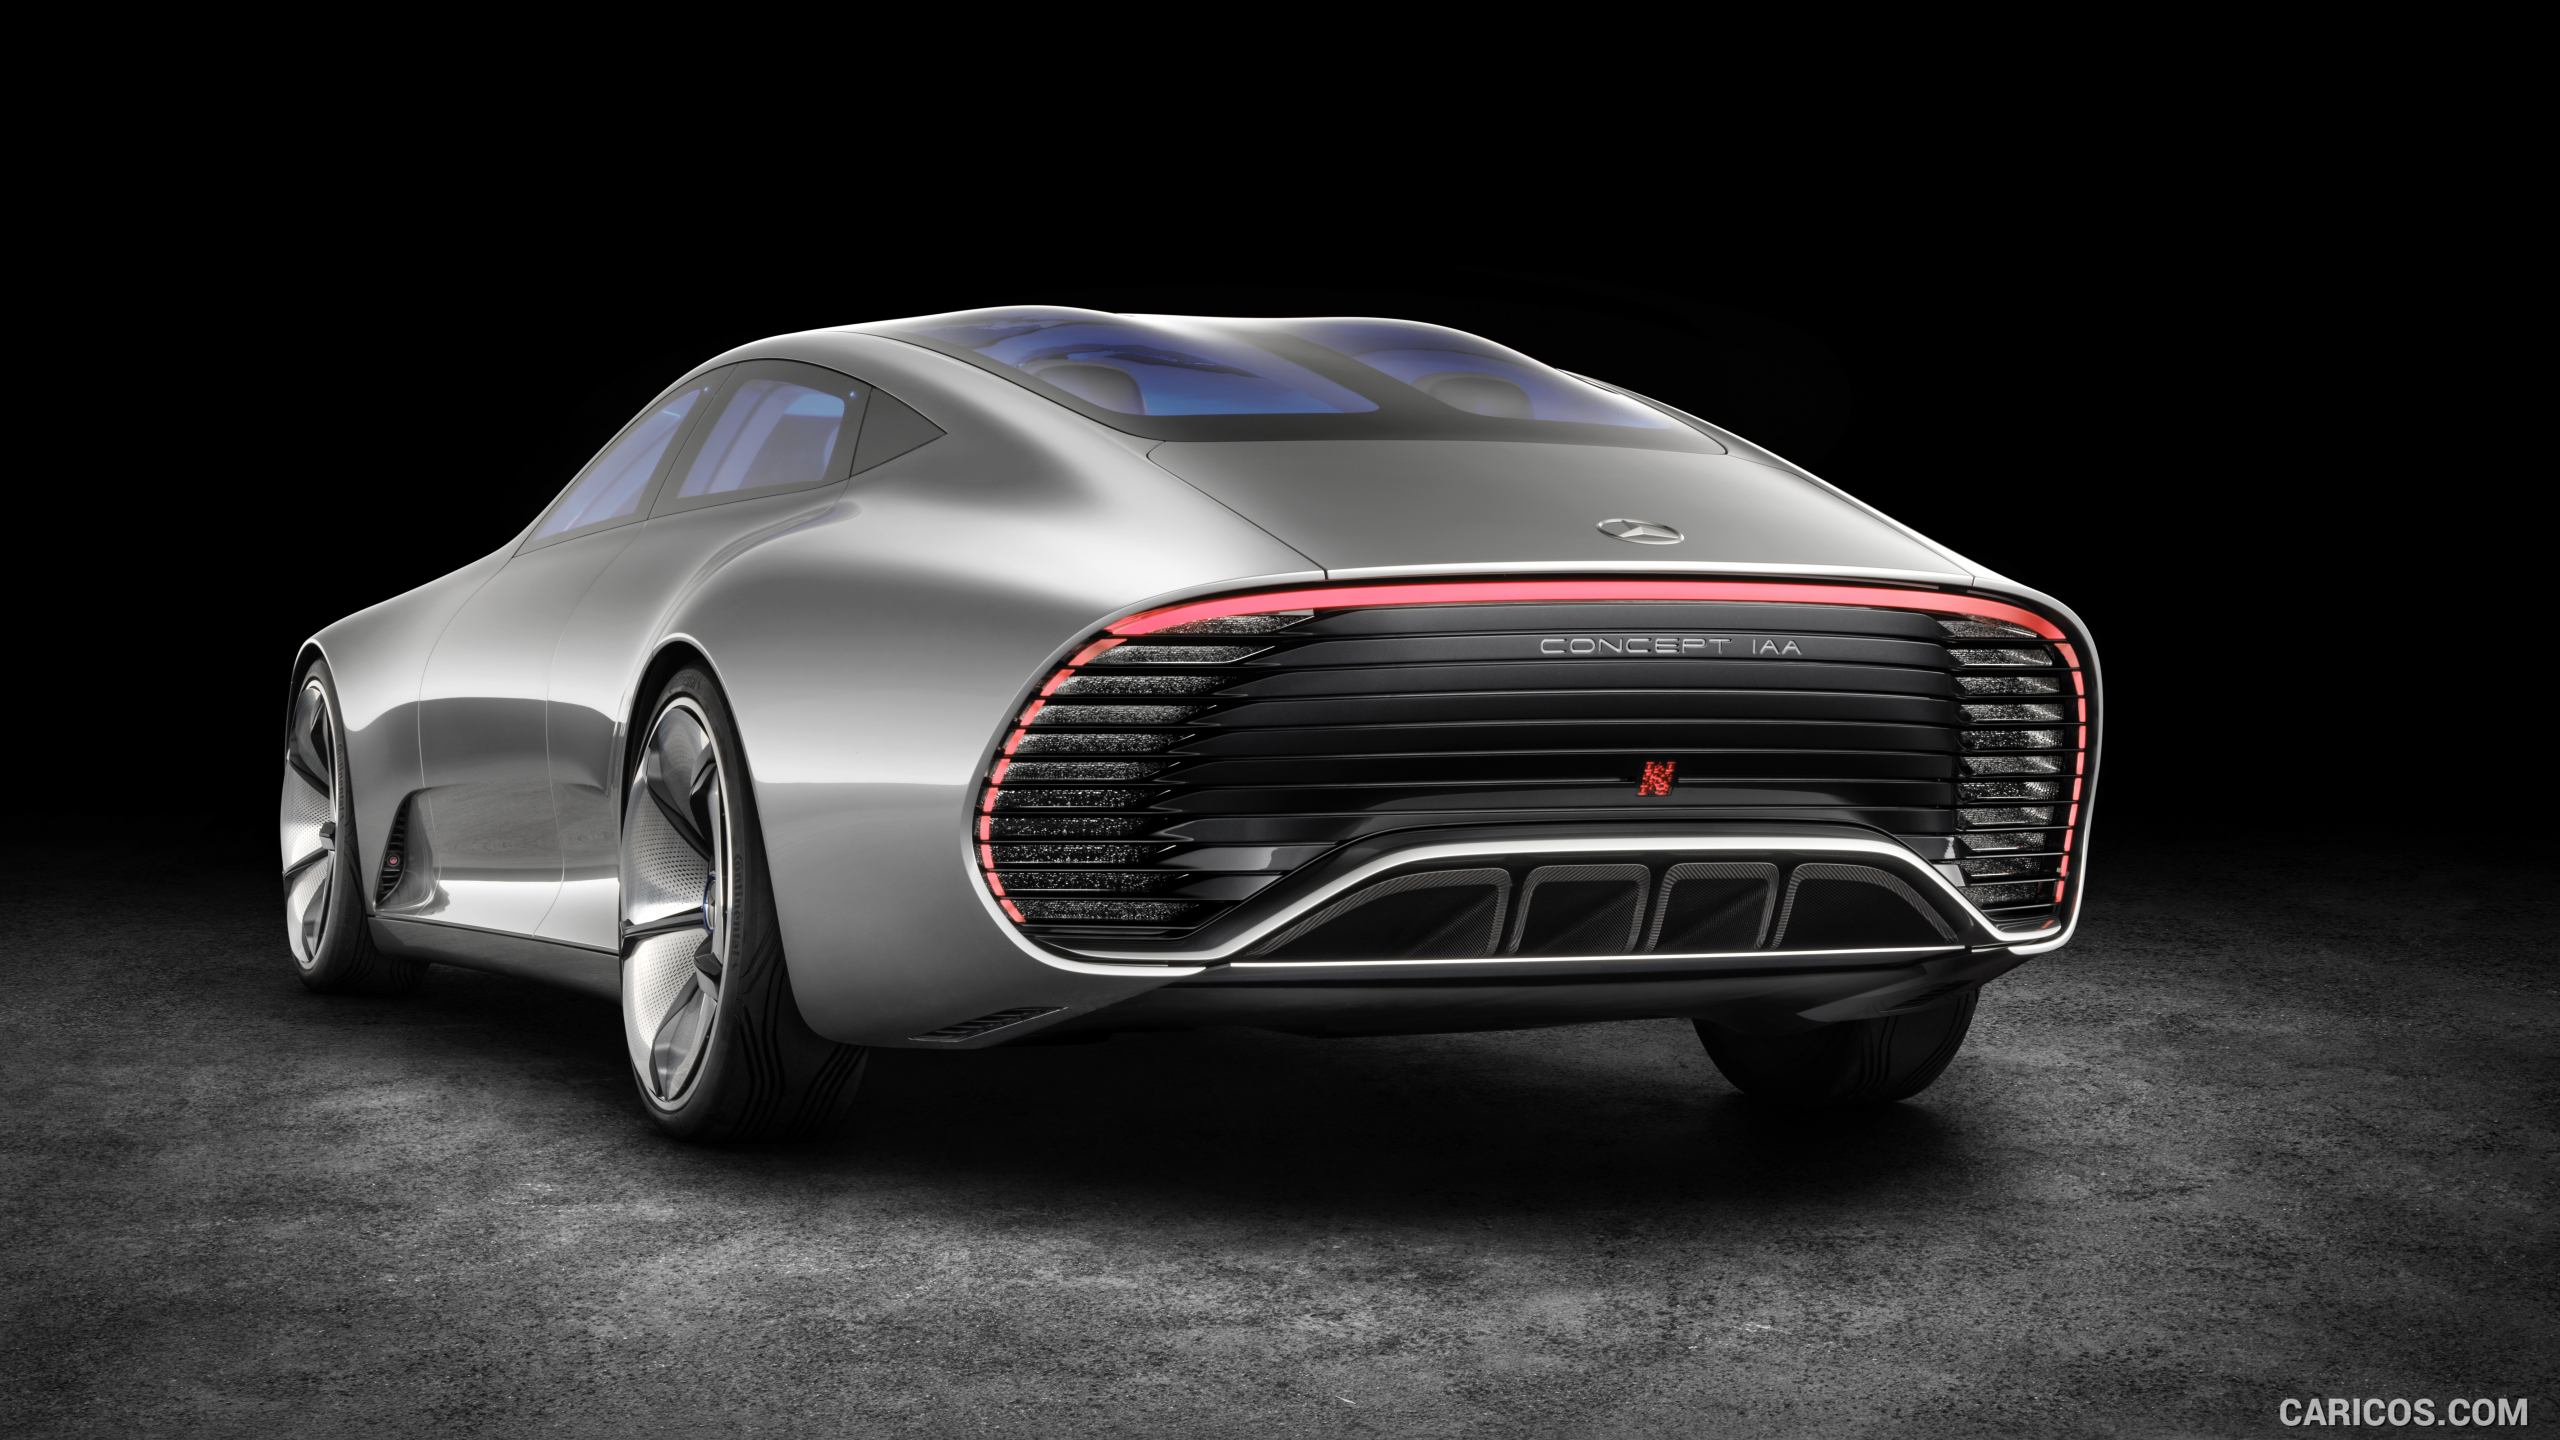 2015 Mercedes-Benz Concept IAA (Intelligent Aerodynamic Automobile) - Rear, #27 of 49